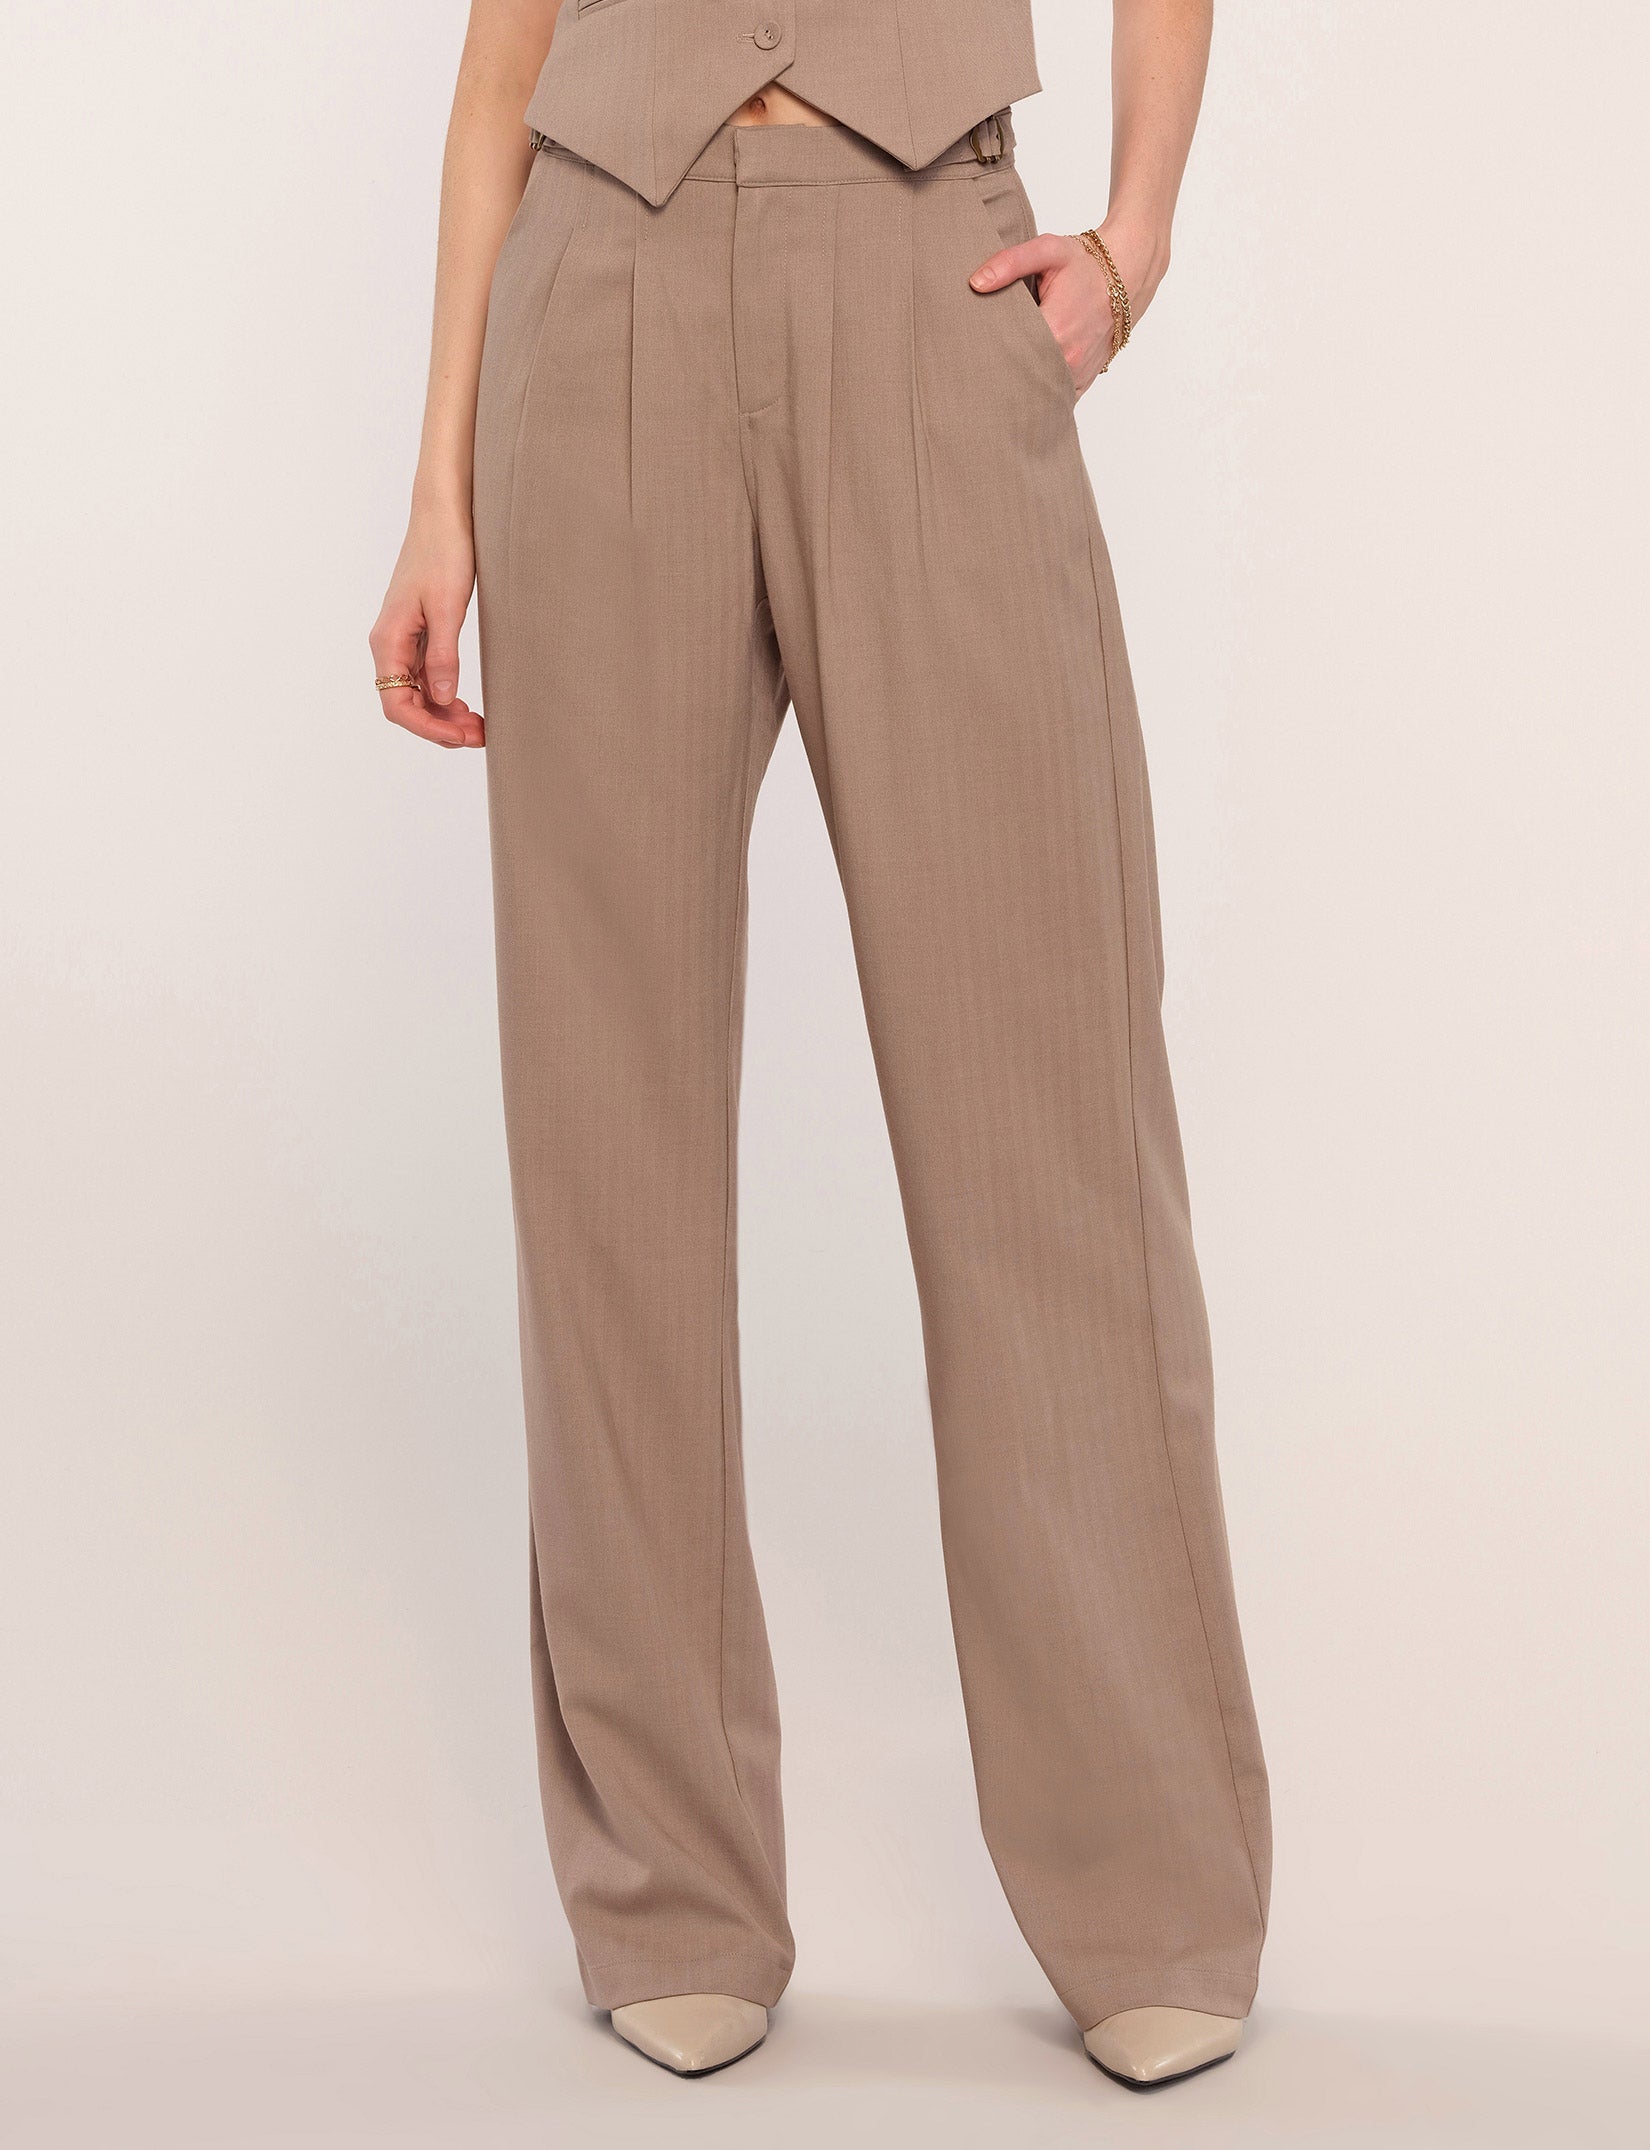 Heartloom, Maxine Trouser Pant in Khaki - Boutique Dandelion